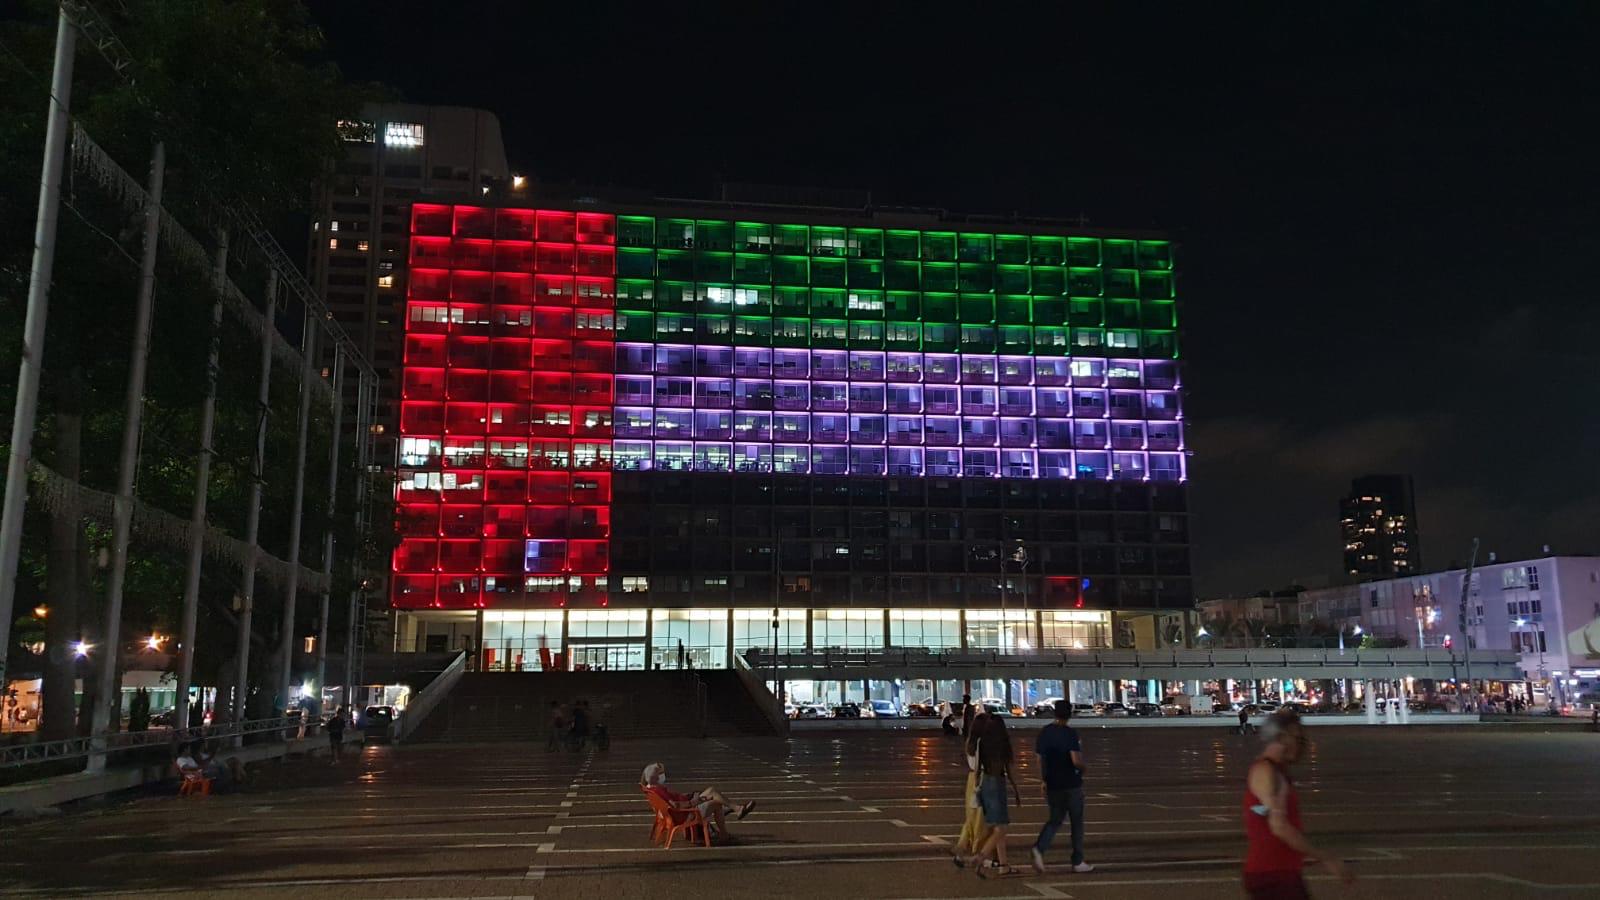 Tel Aviv Municipality Illuminates Building With UAE, Israeli Flags